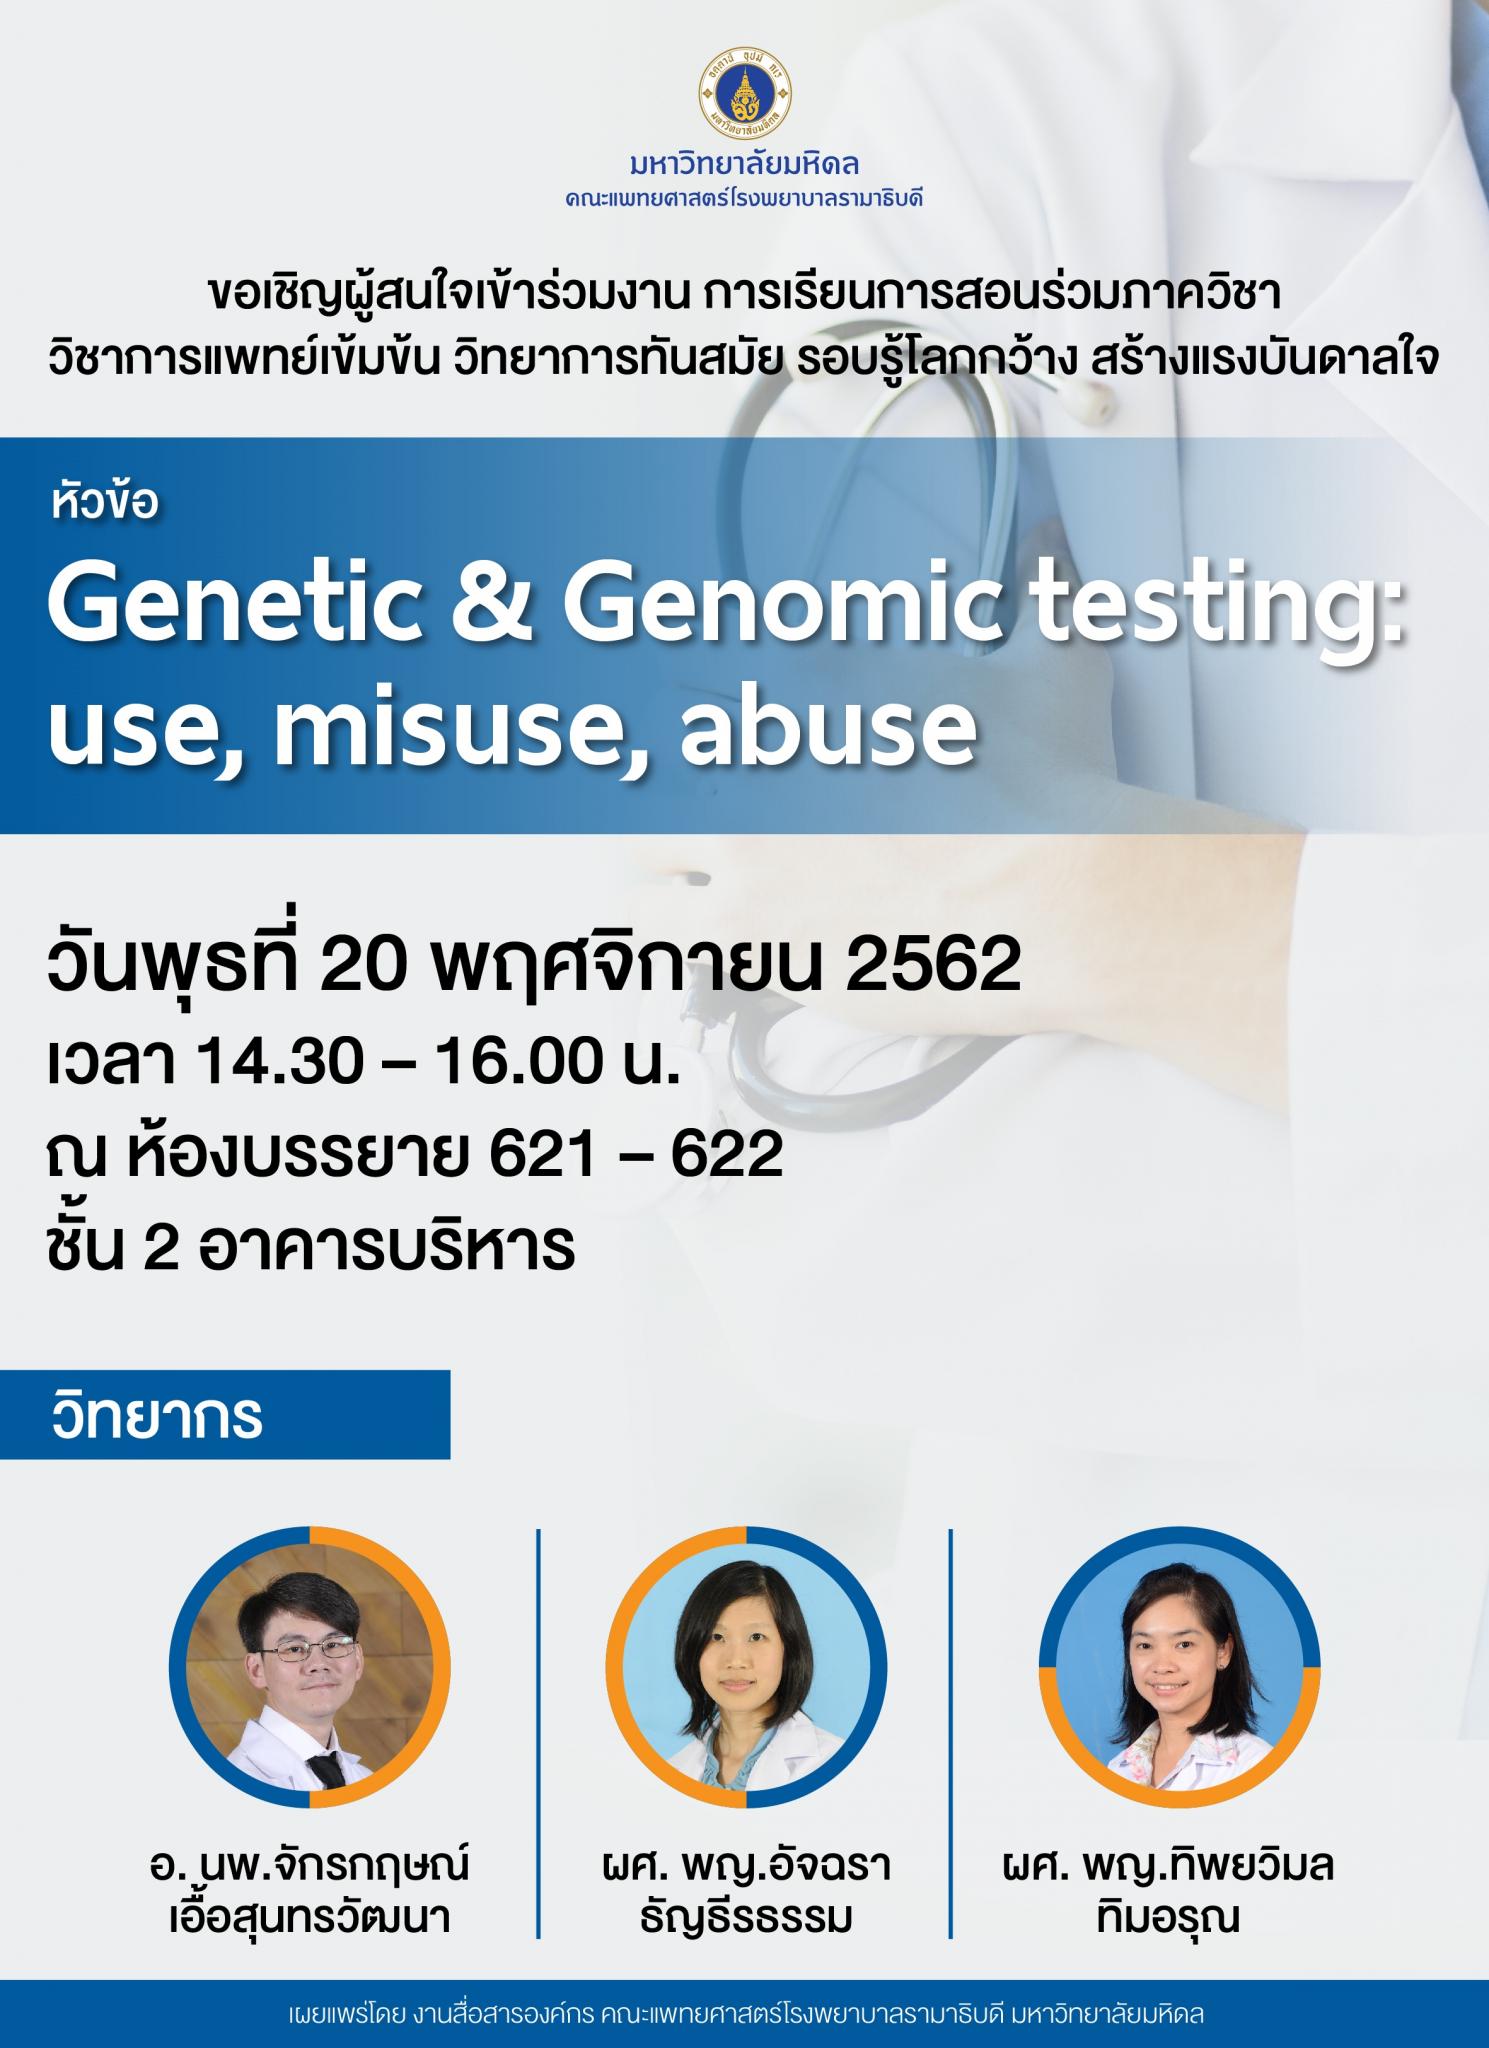 Genetic & Genomic testing: use, misuse, abuse